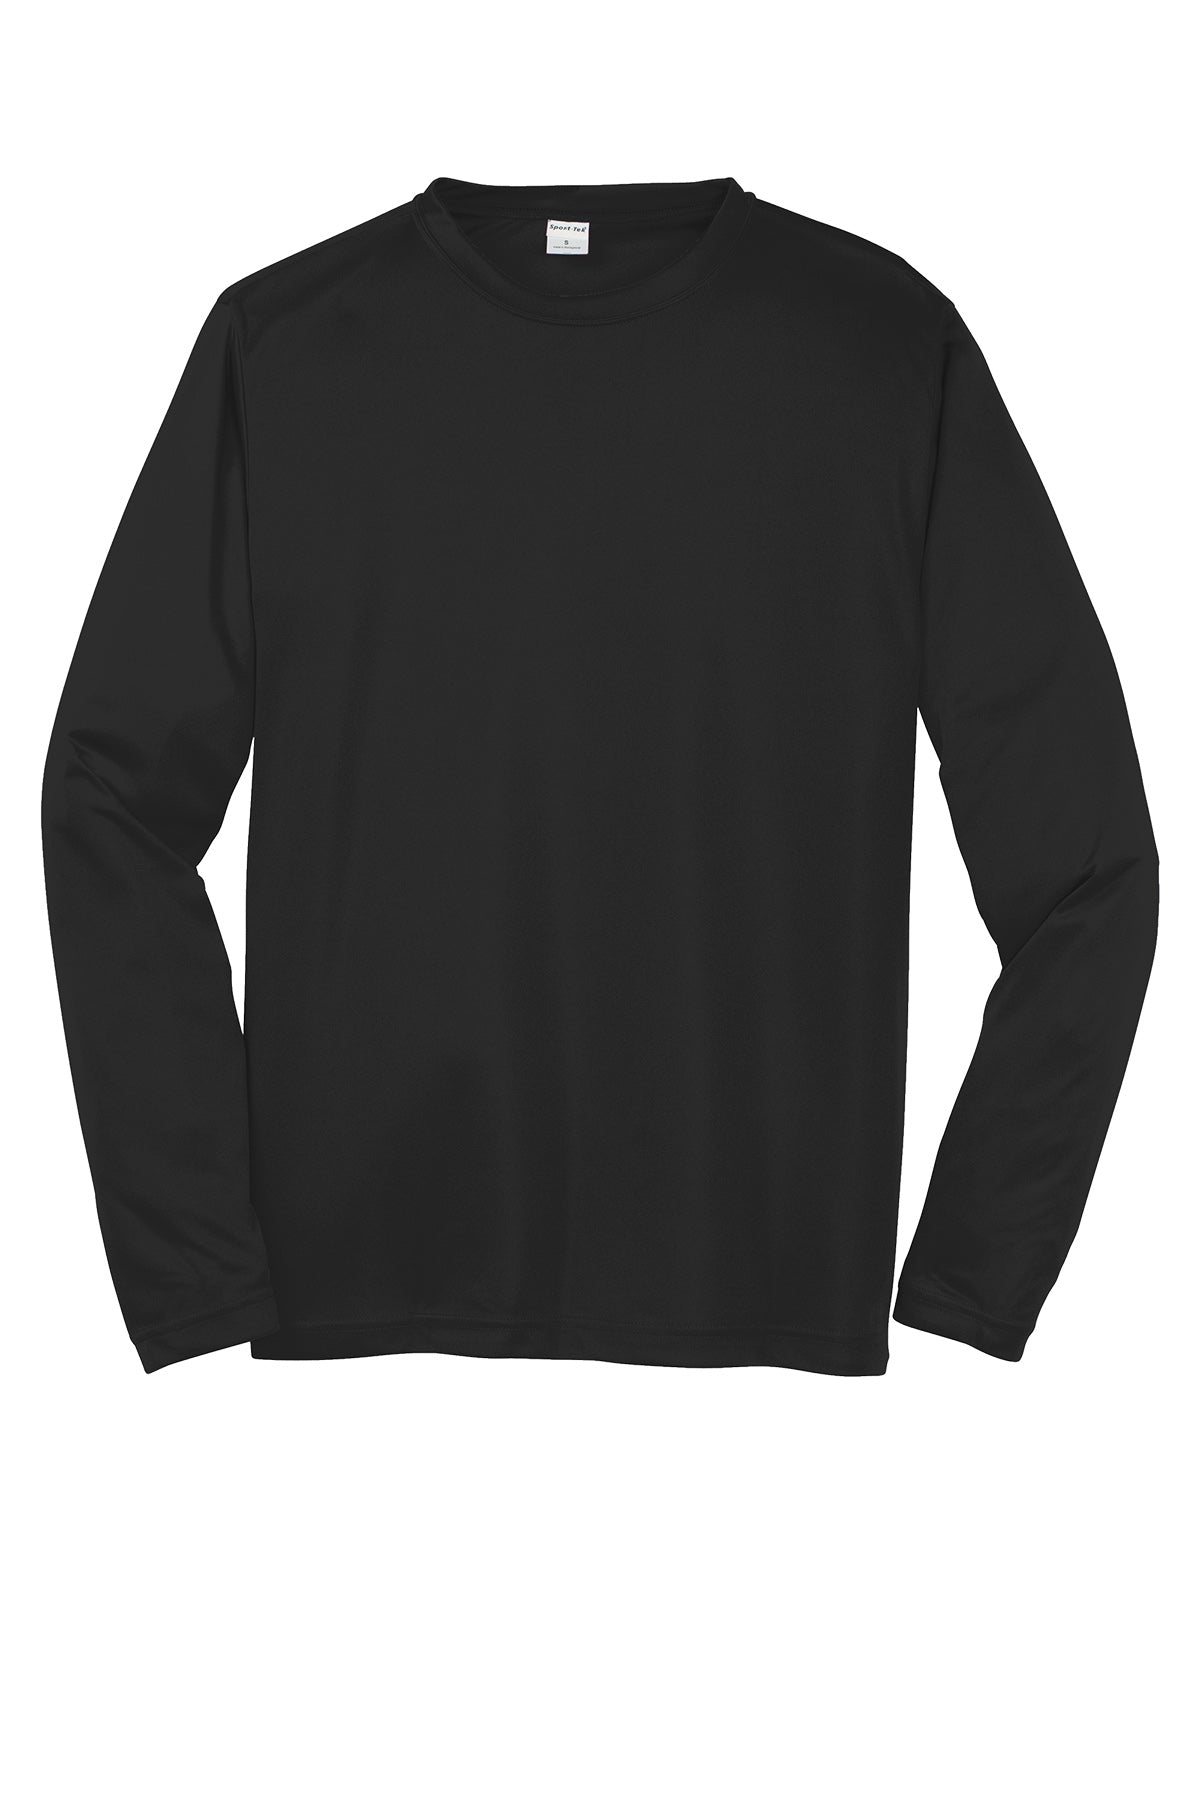 Sport-Tek St350Ls Polyester Adult Long Sleeve T-Shirt Ad Small / Black